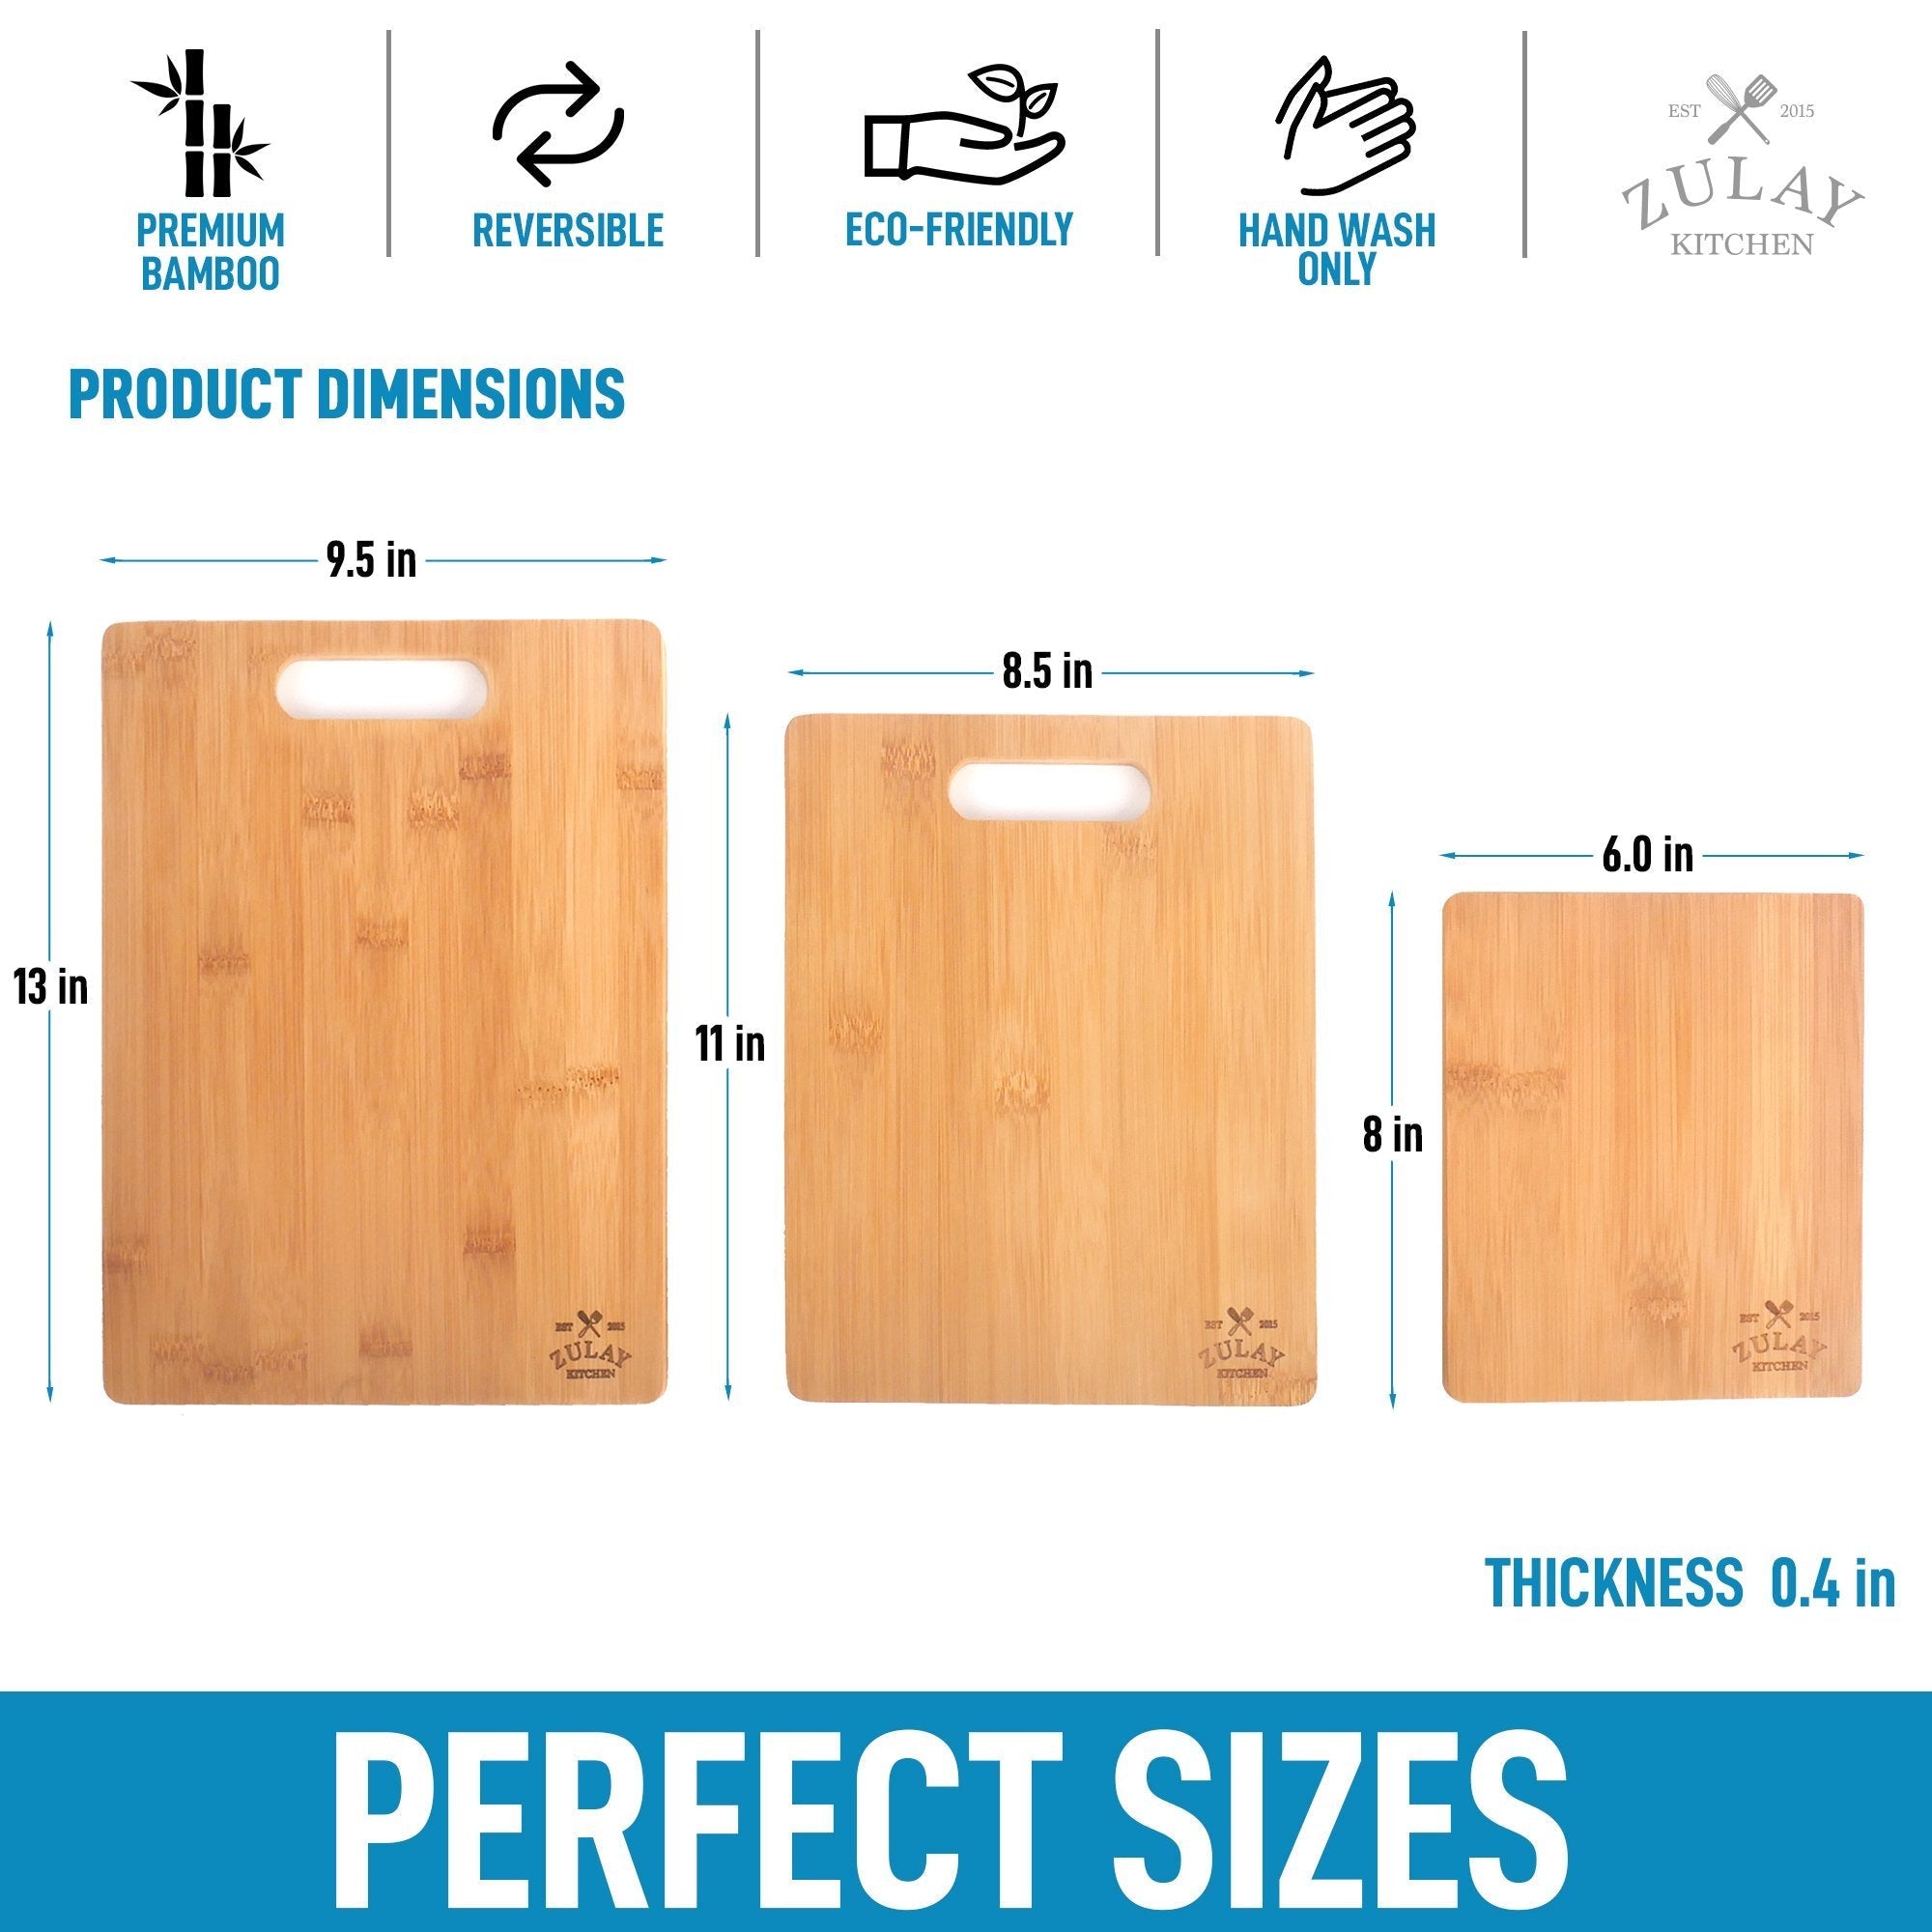 Wooden Cutting Boards for Kitchen - Bamboo Chopping Board Set of 3 | BlauKe